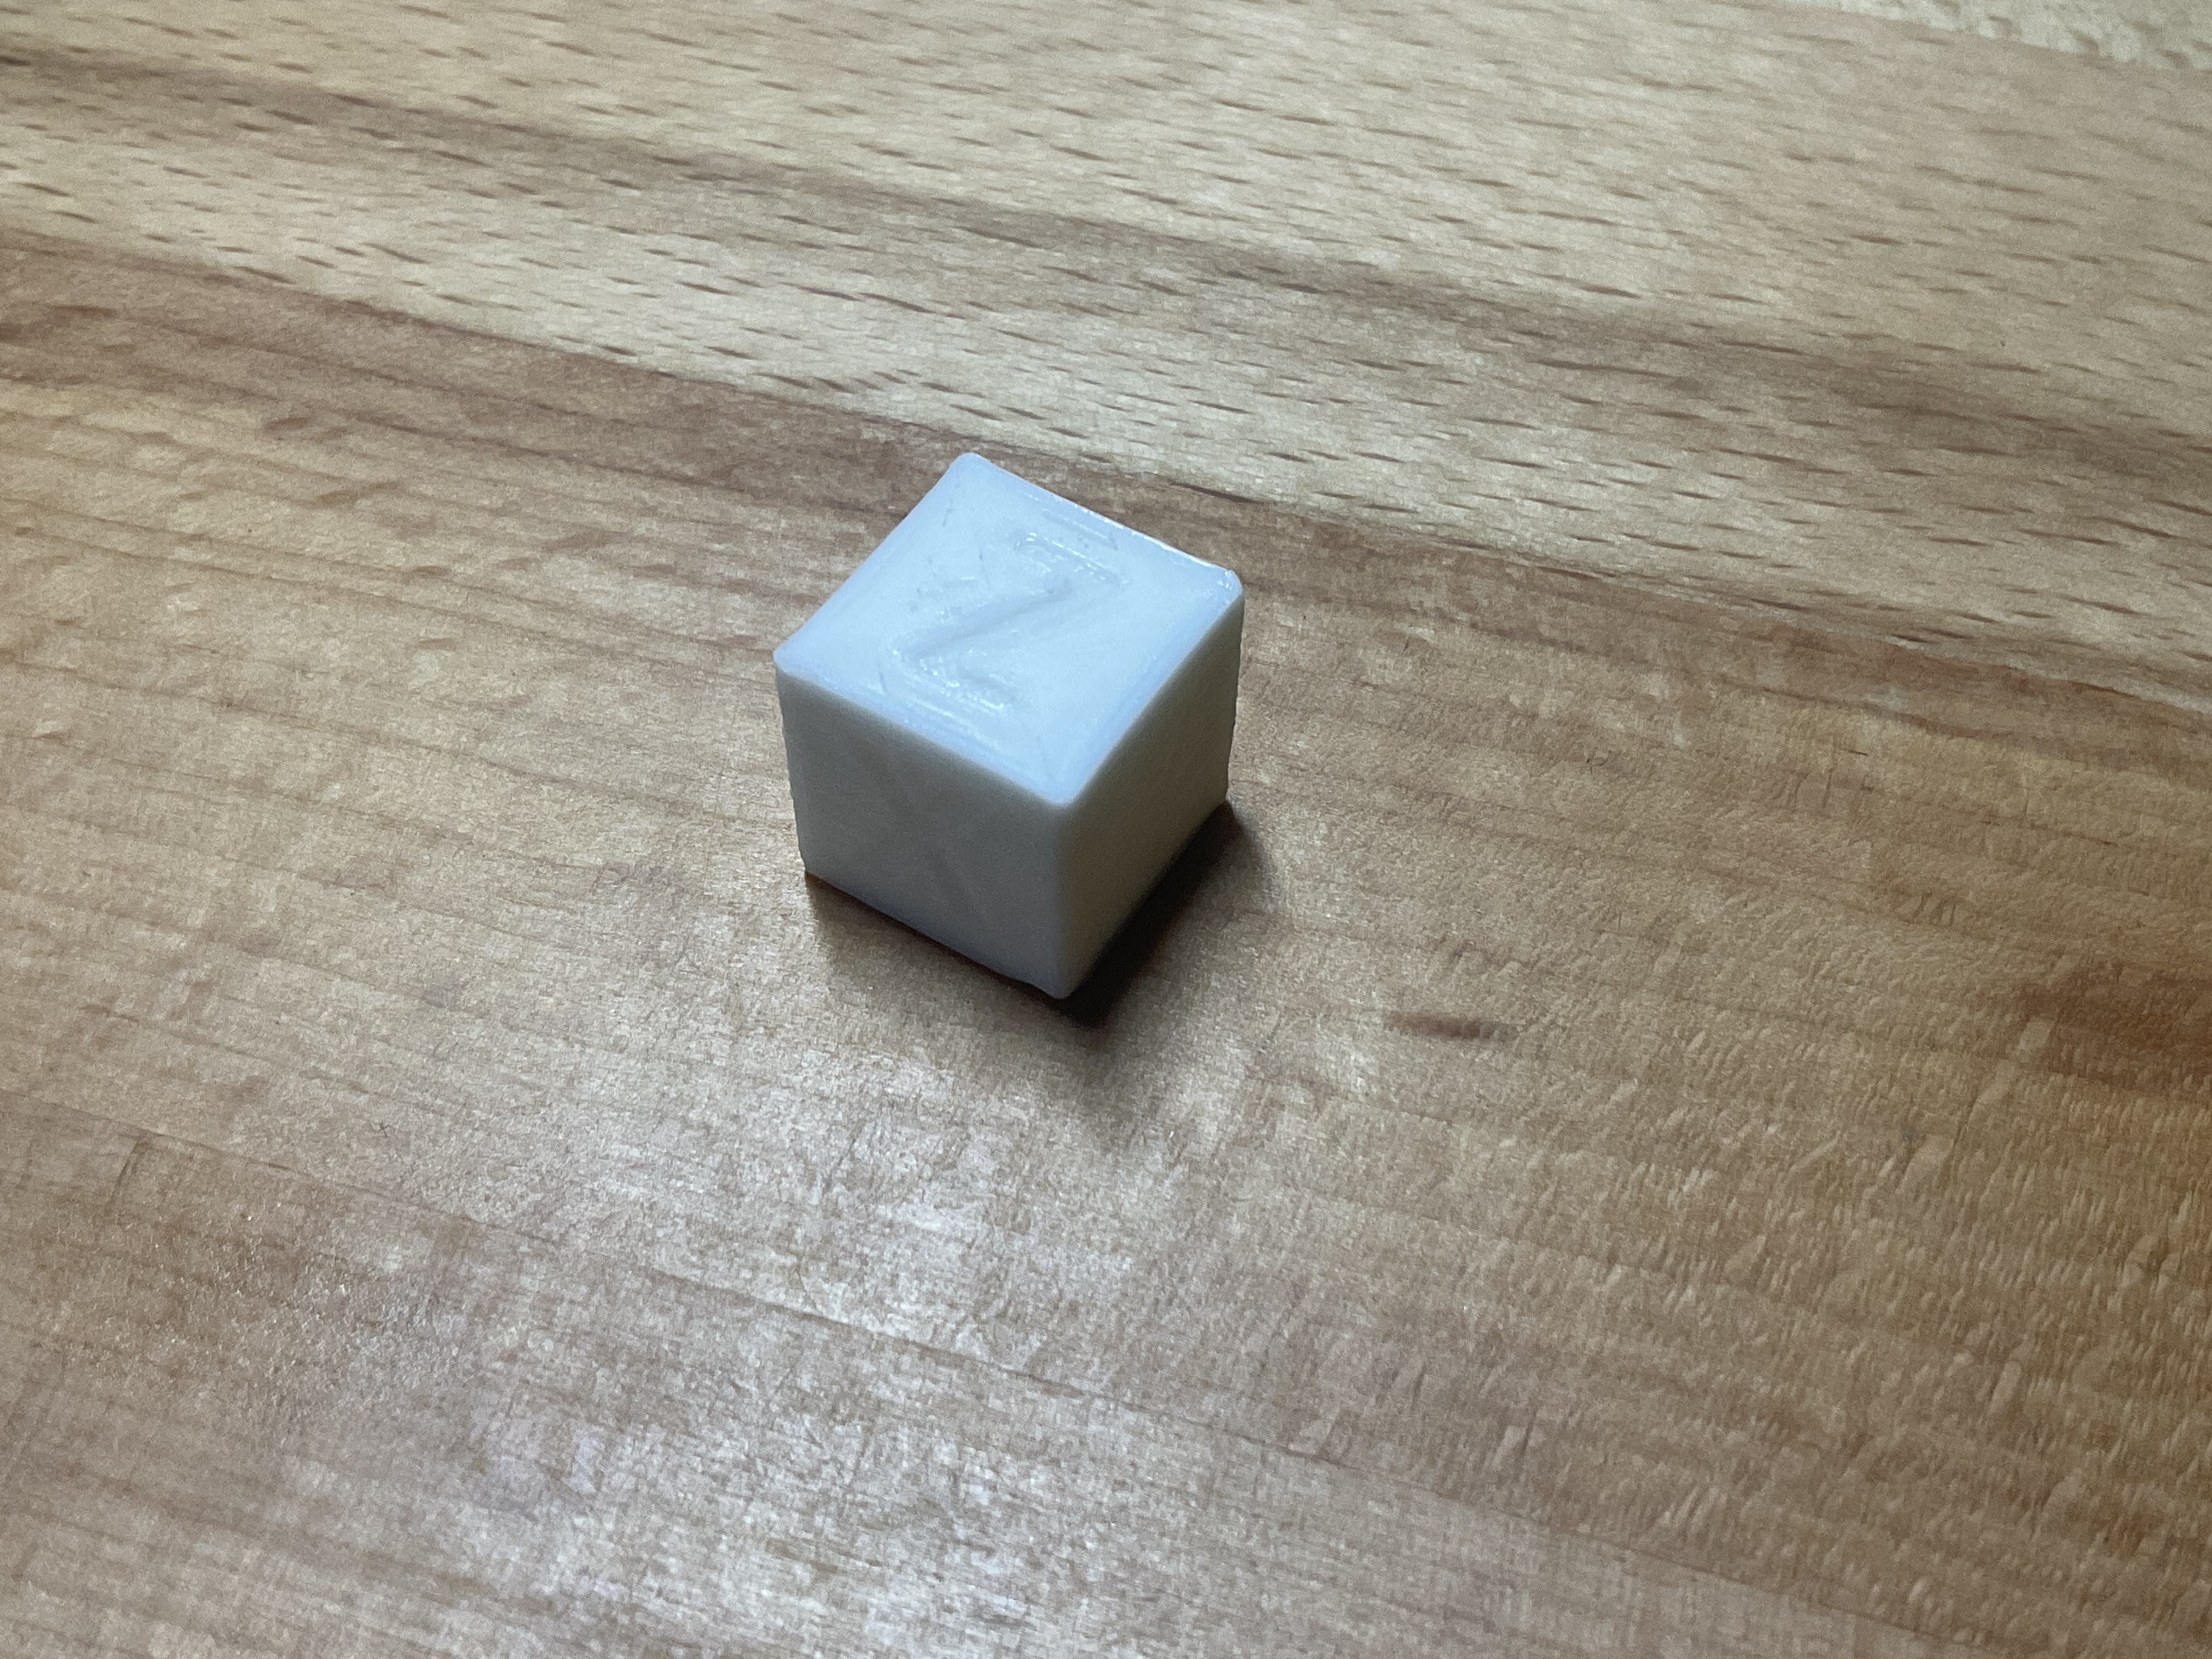 Test Cube